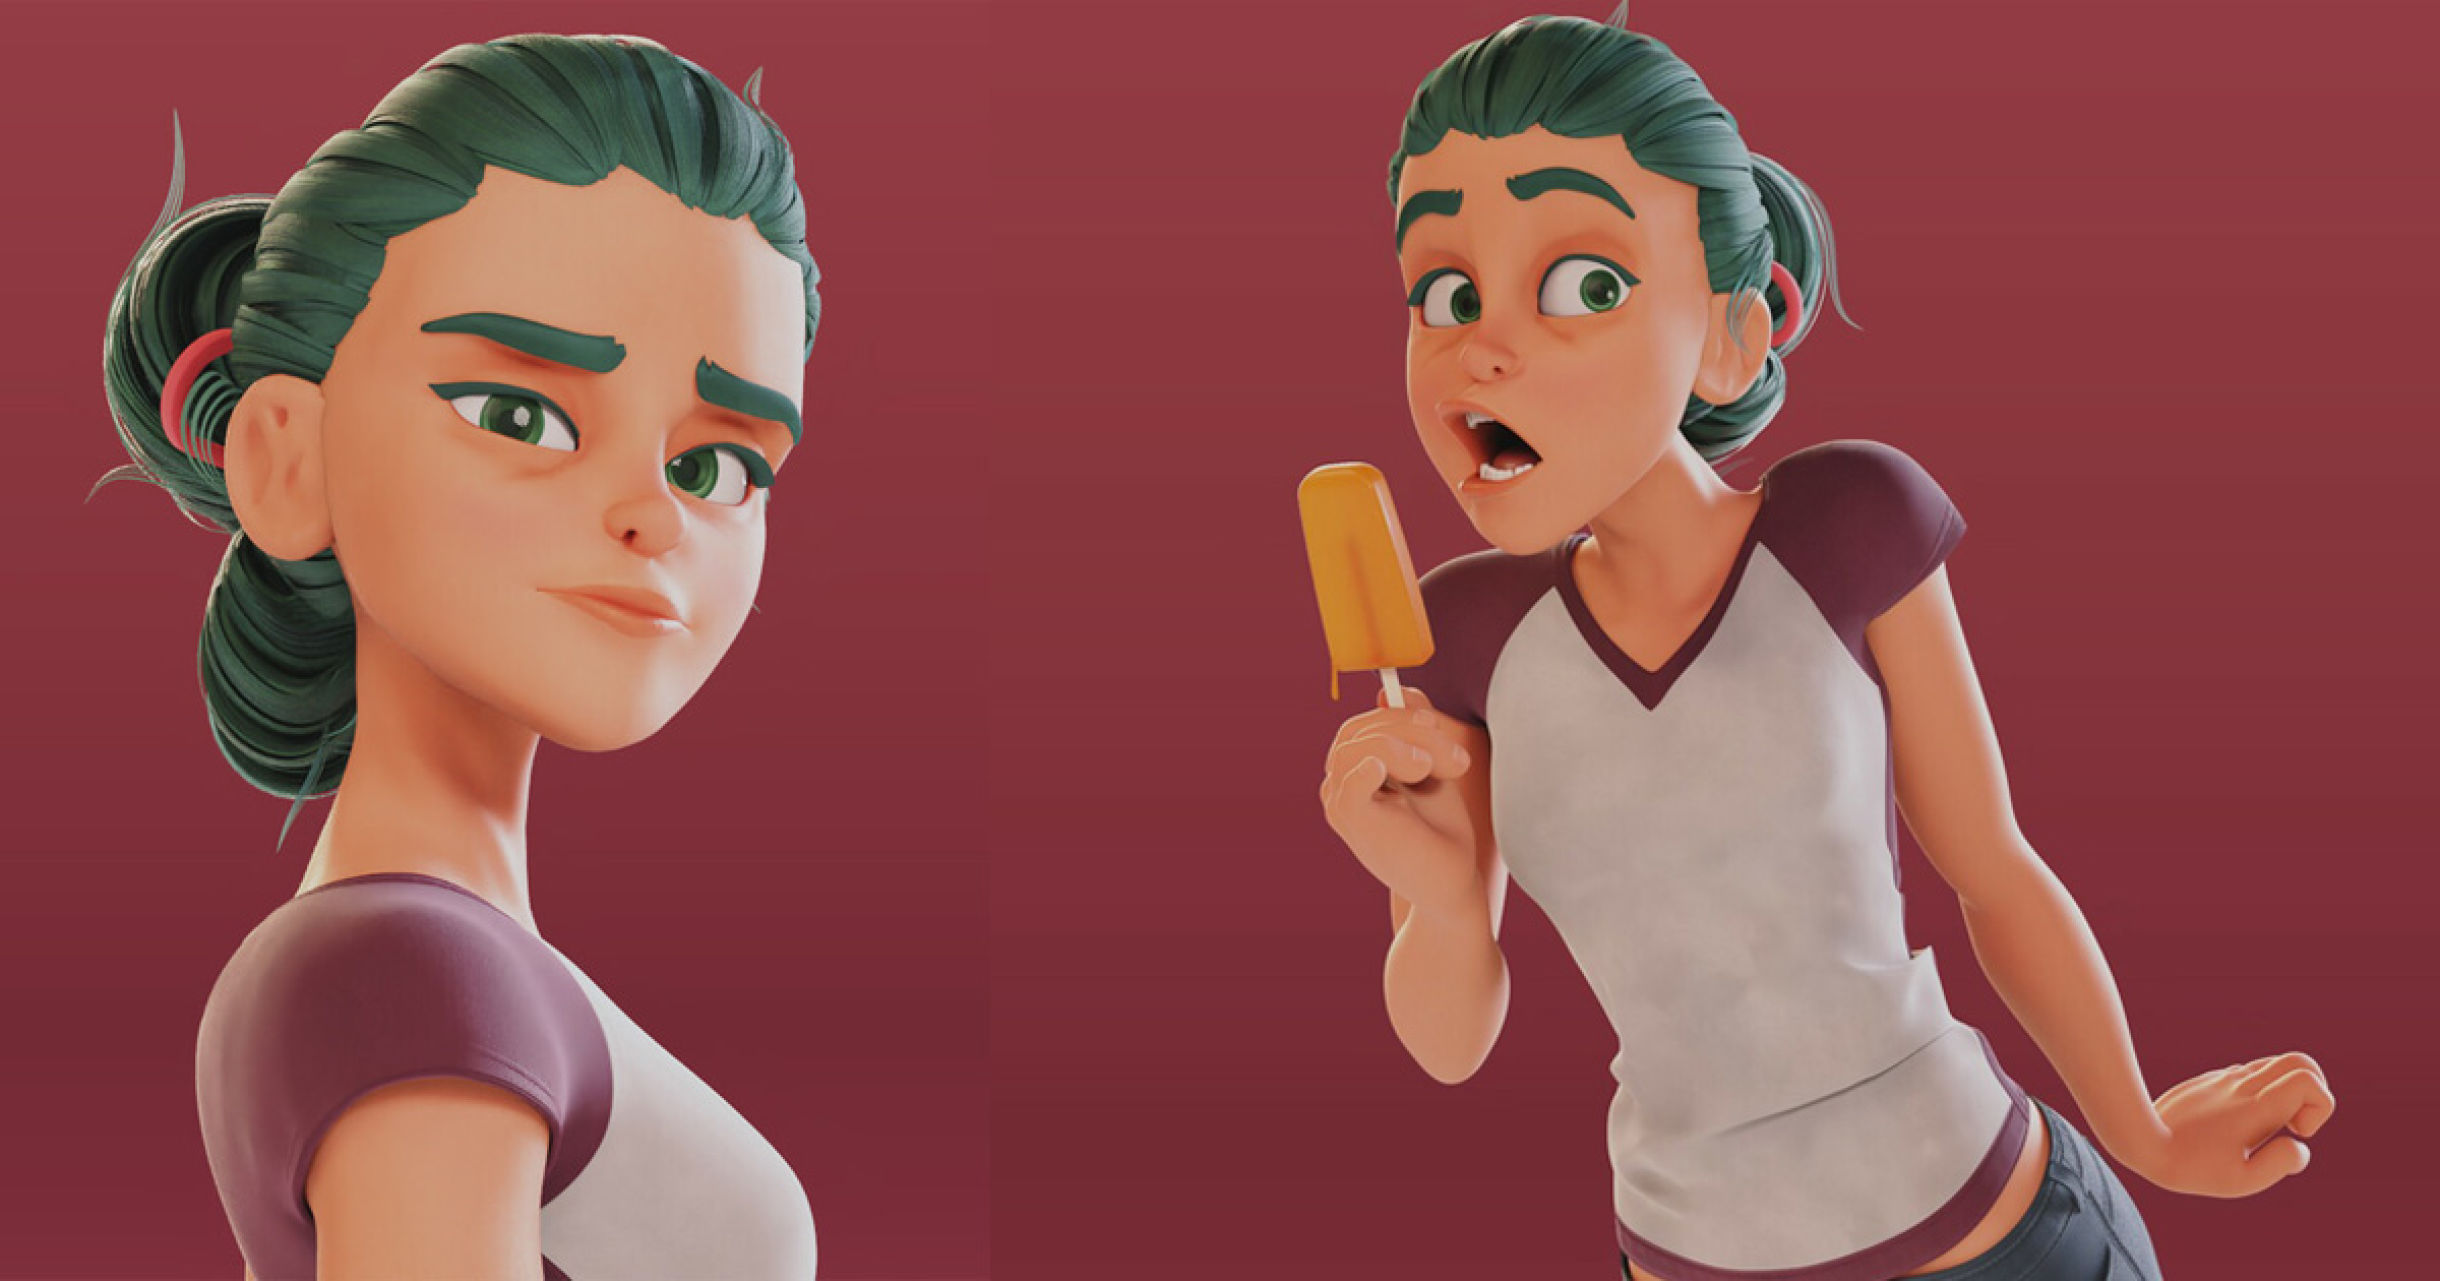 blender 3d animation character